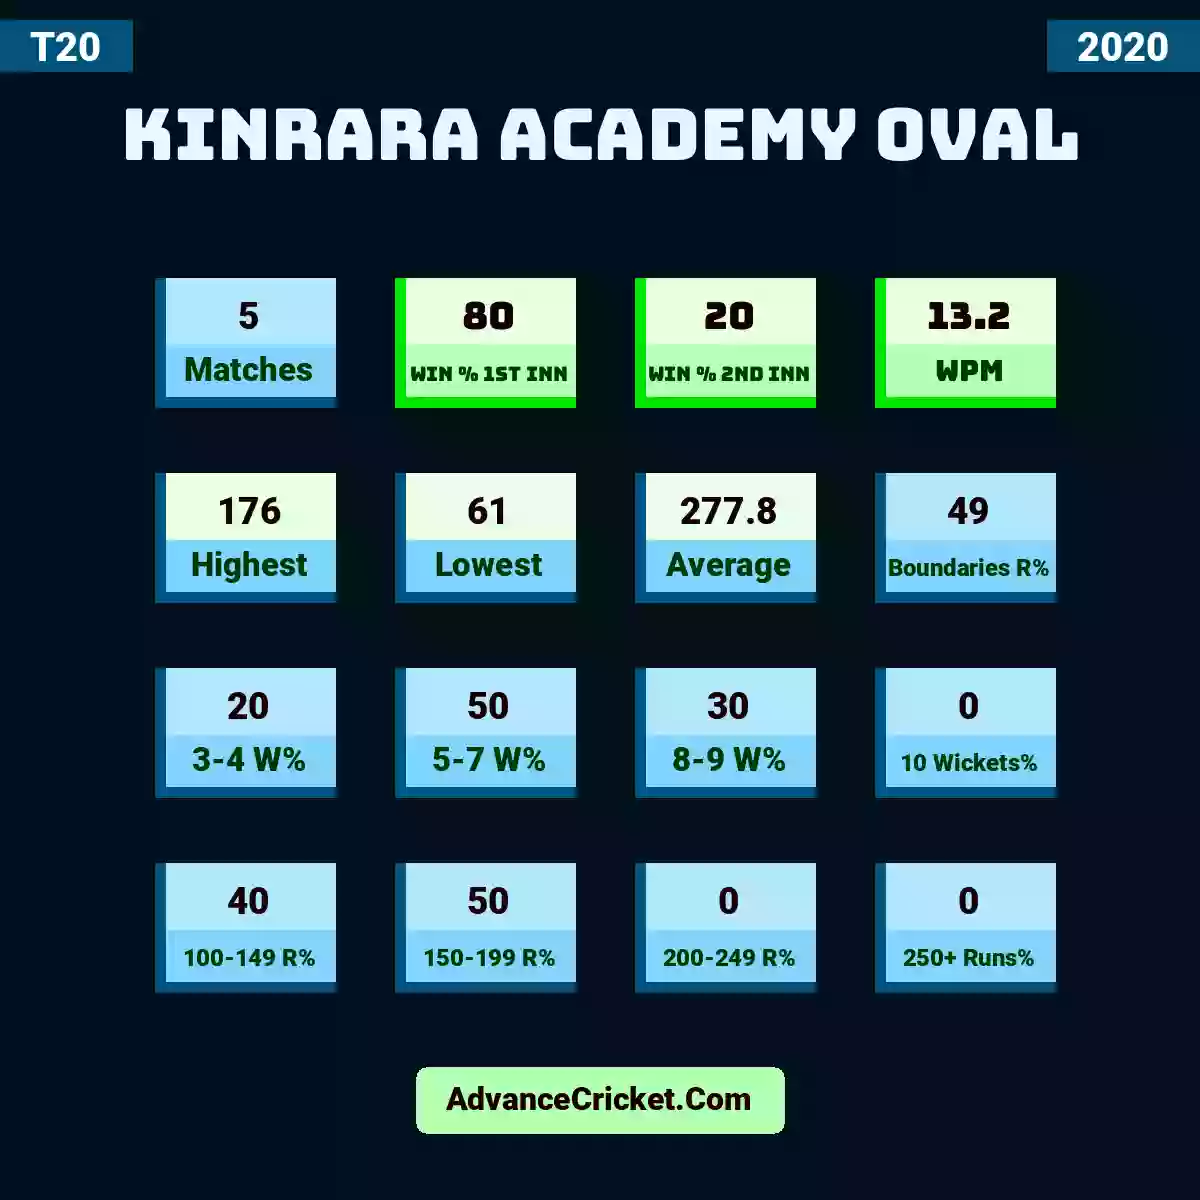 Image showing Kinrara Academy Oval with Matches: 5, Win % 1st Inn: 80, Win % 2nd Inn: 20, WPM: 13.2, Highest: 176, Lowest: 61, Average: 277.8, Boundaries R%: 49, 3-4 W%: 20, 5-7 W%: 50, 8-9 W%: 30, 10 Wickets%: 0, 100-149 R%: 40, 150-199 R%: 50, 200-249 R%: 0, 250+ Runs%: 0.